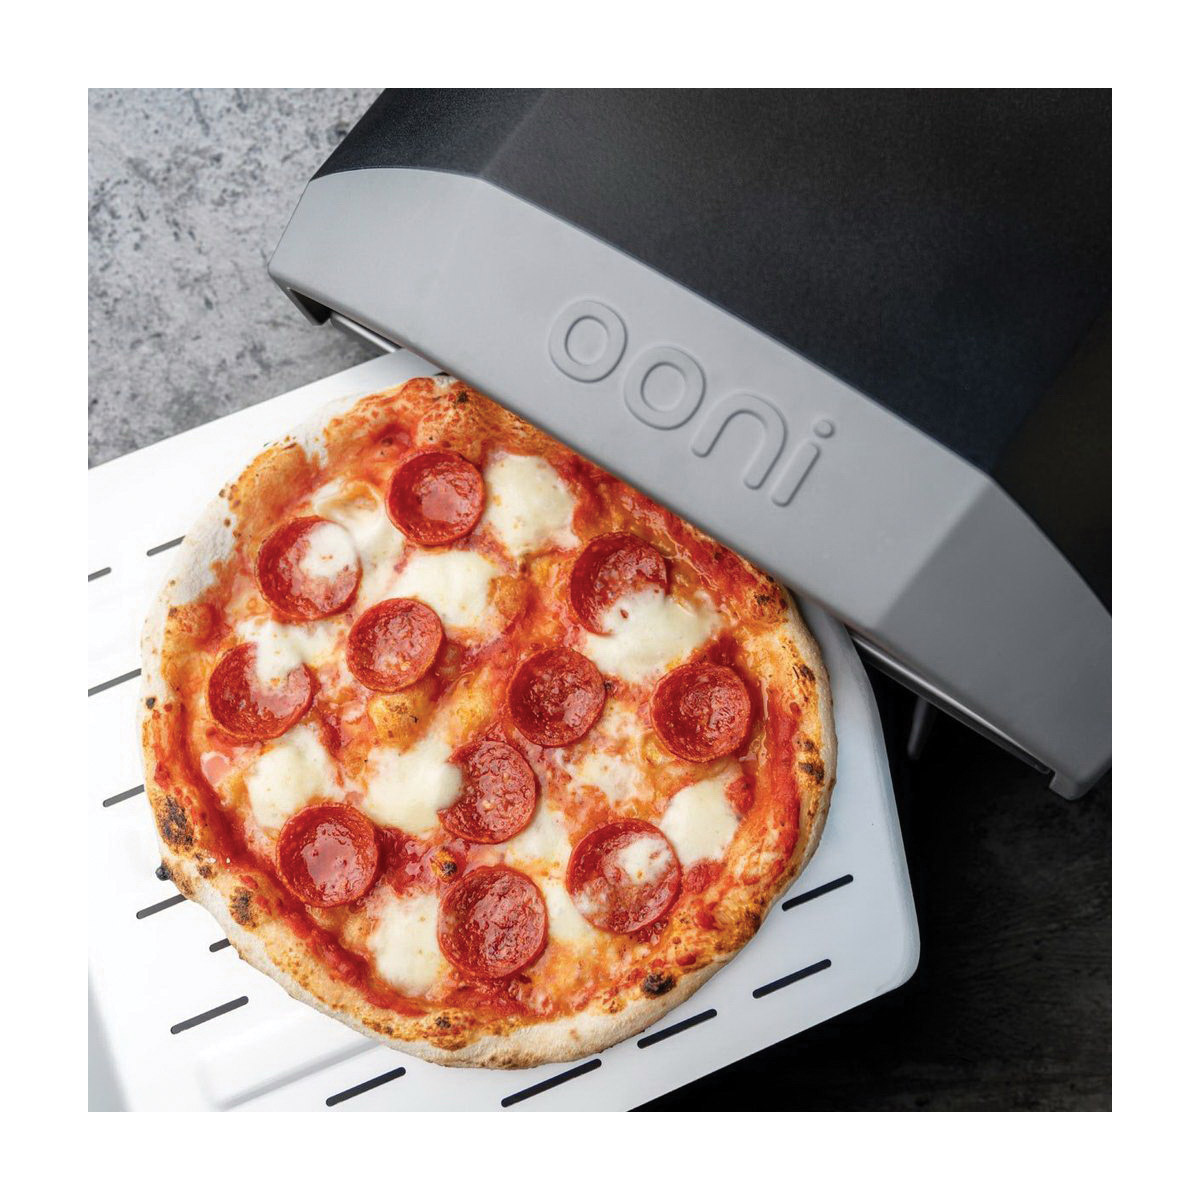 Ooni Koda 1 burners Liquid Propane Outdoor Pizza Oven Black - 4